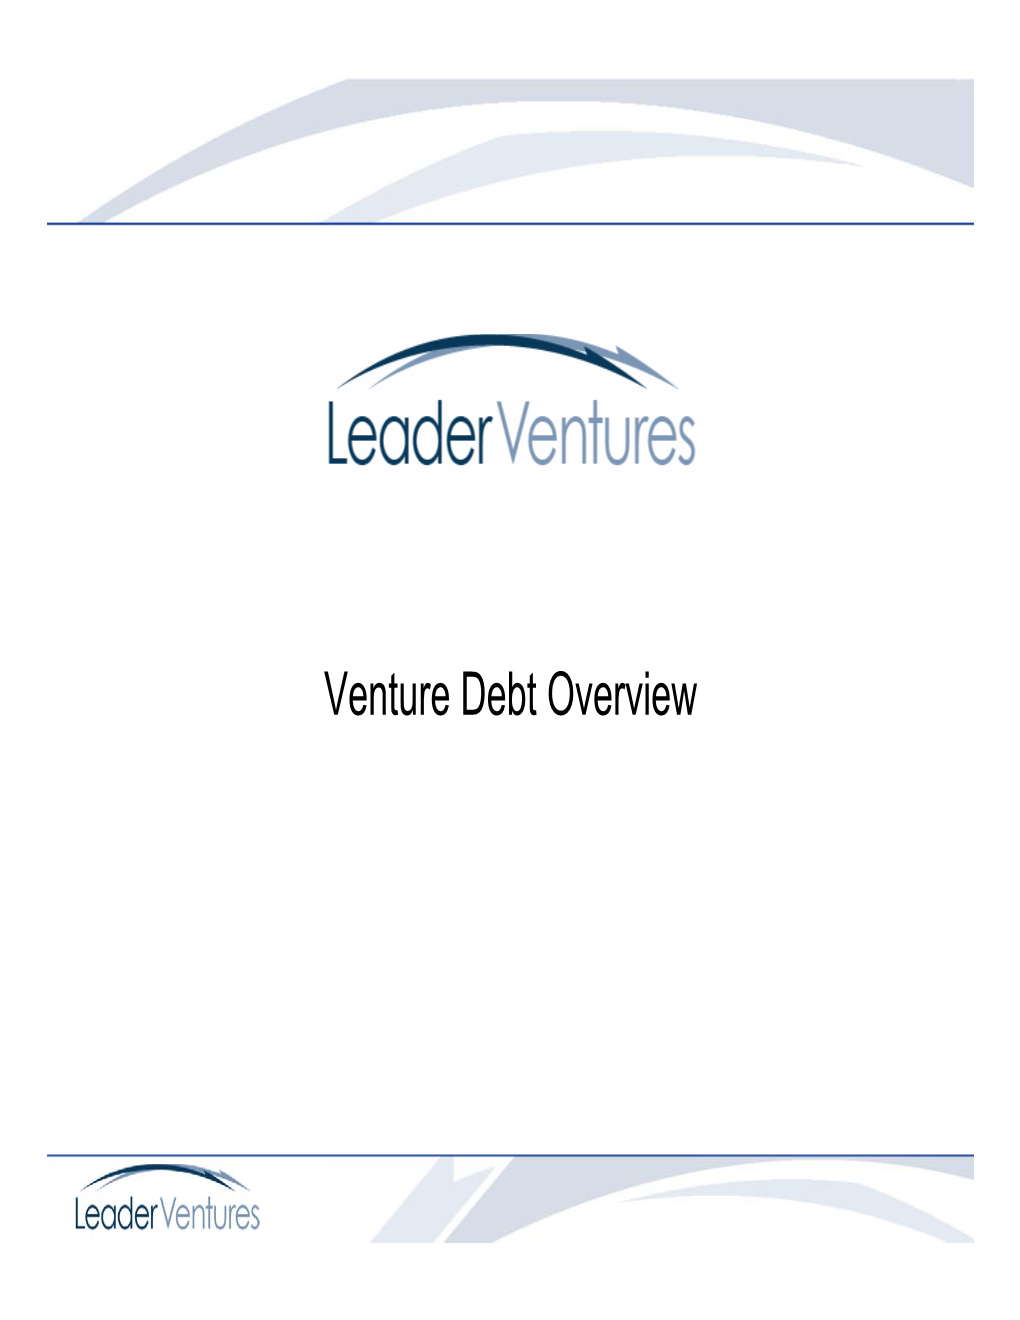 Venture Debt Overview Introduction